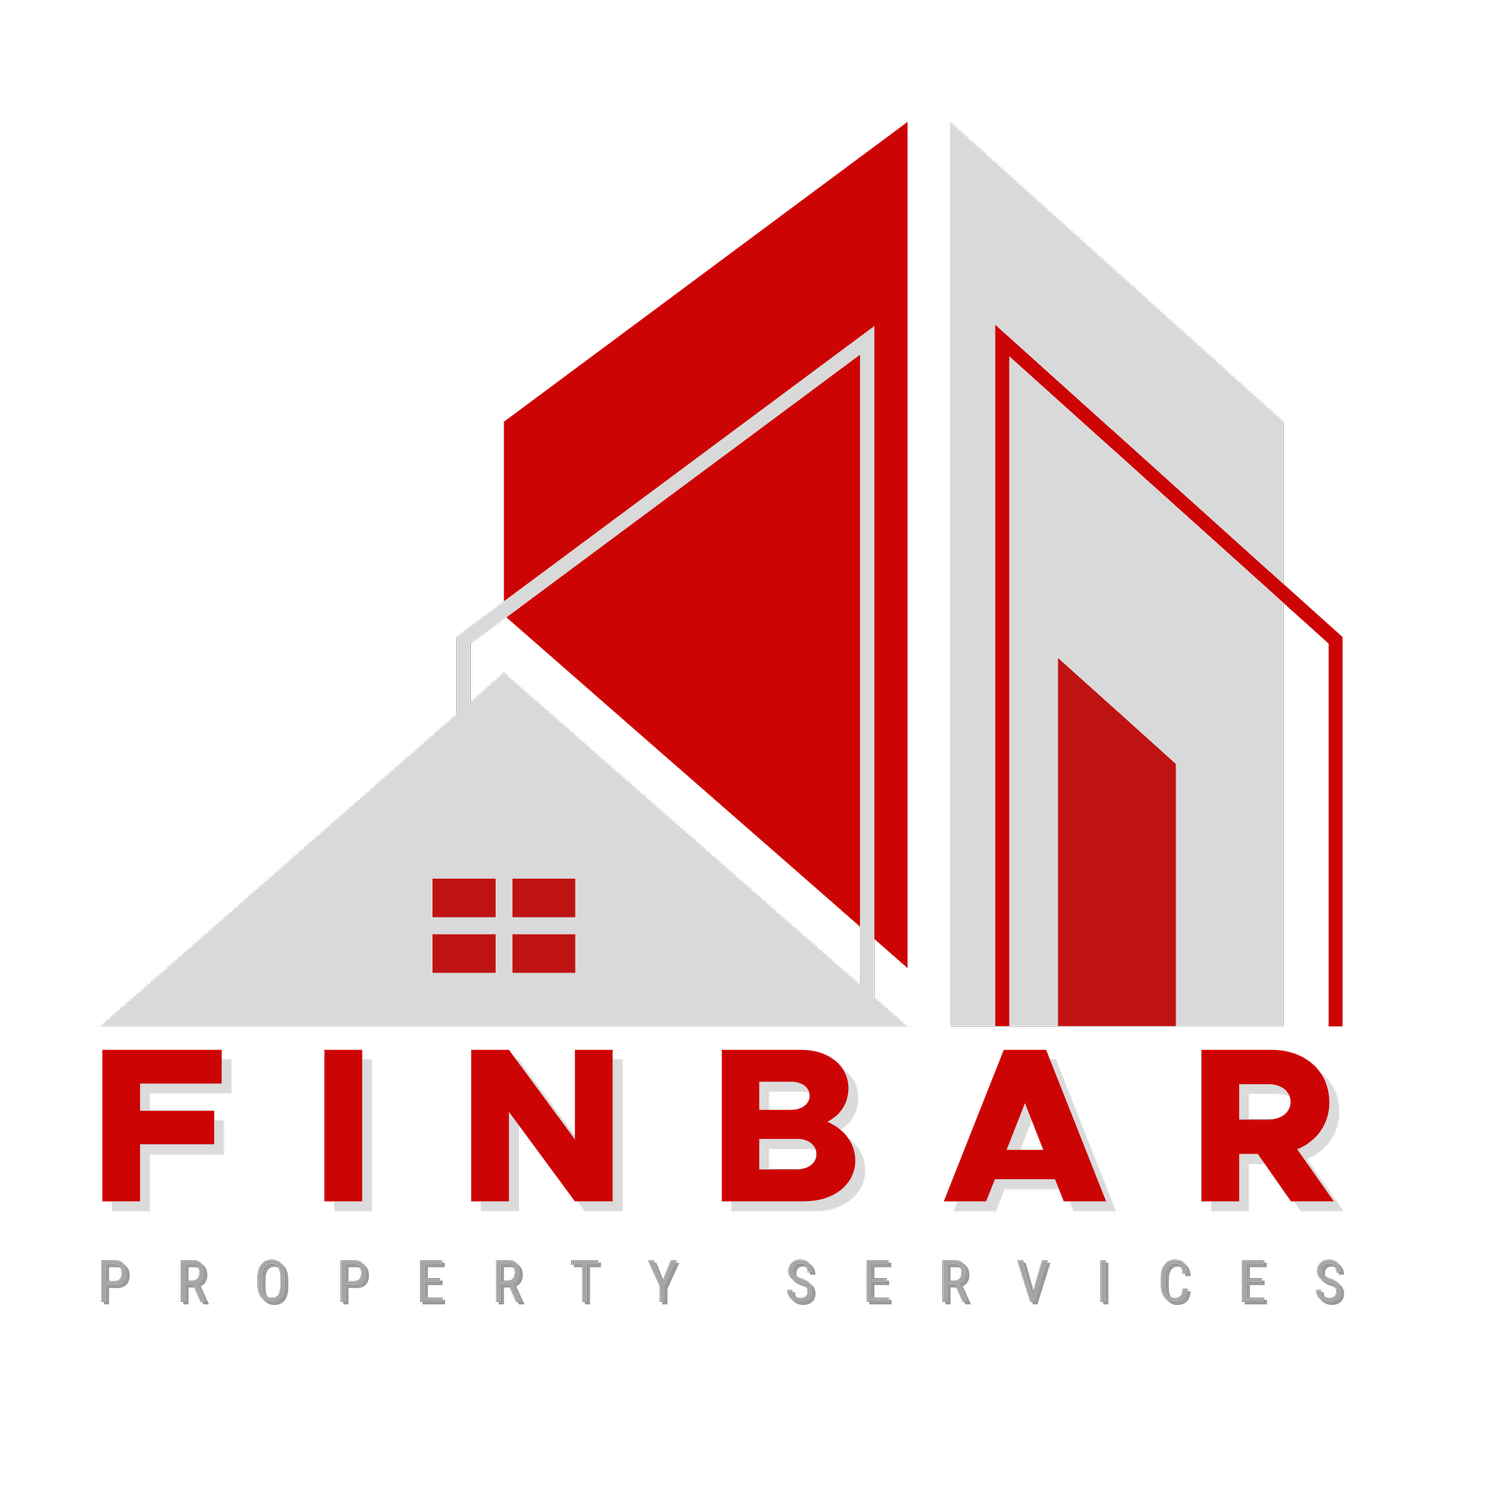 Finbar Property Services